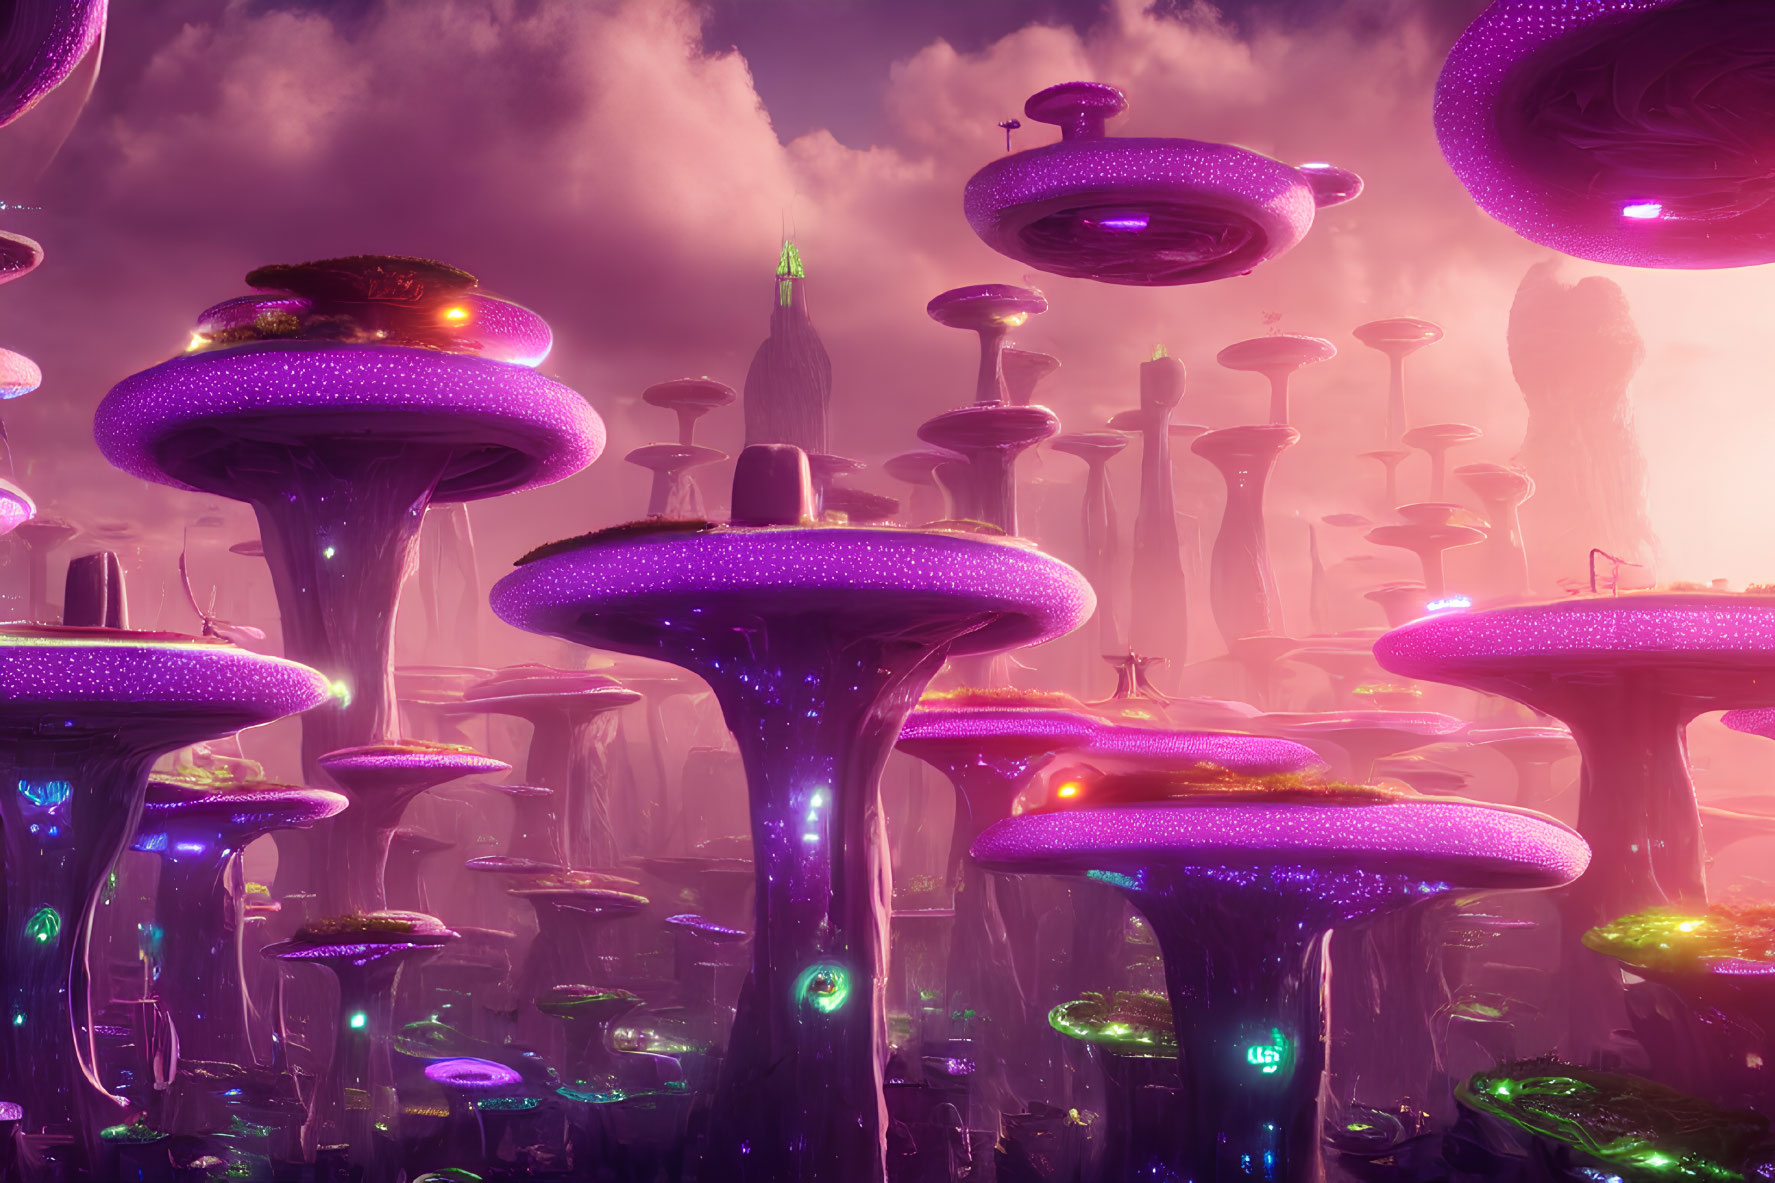 Alien cityscape with purple mushroom-like towers under pink sky